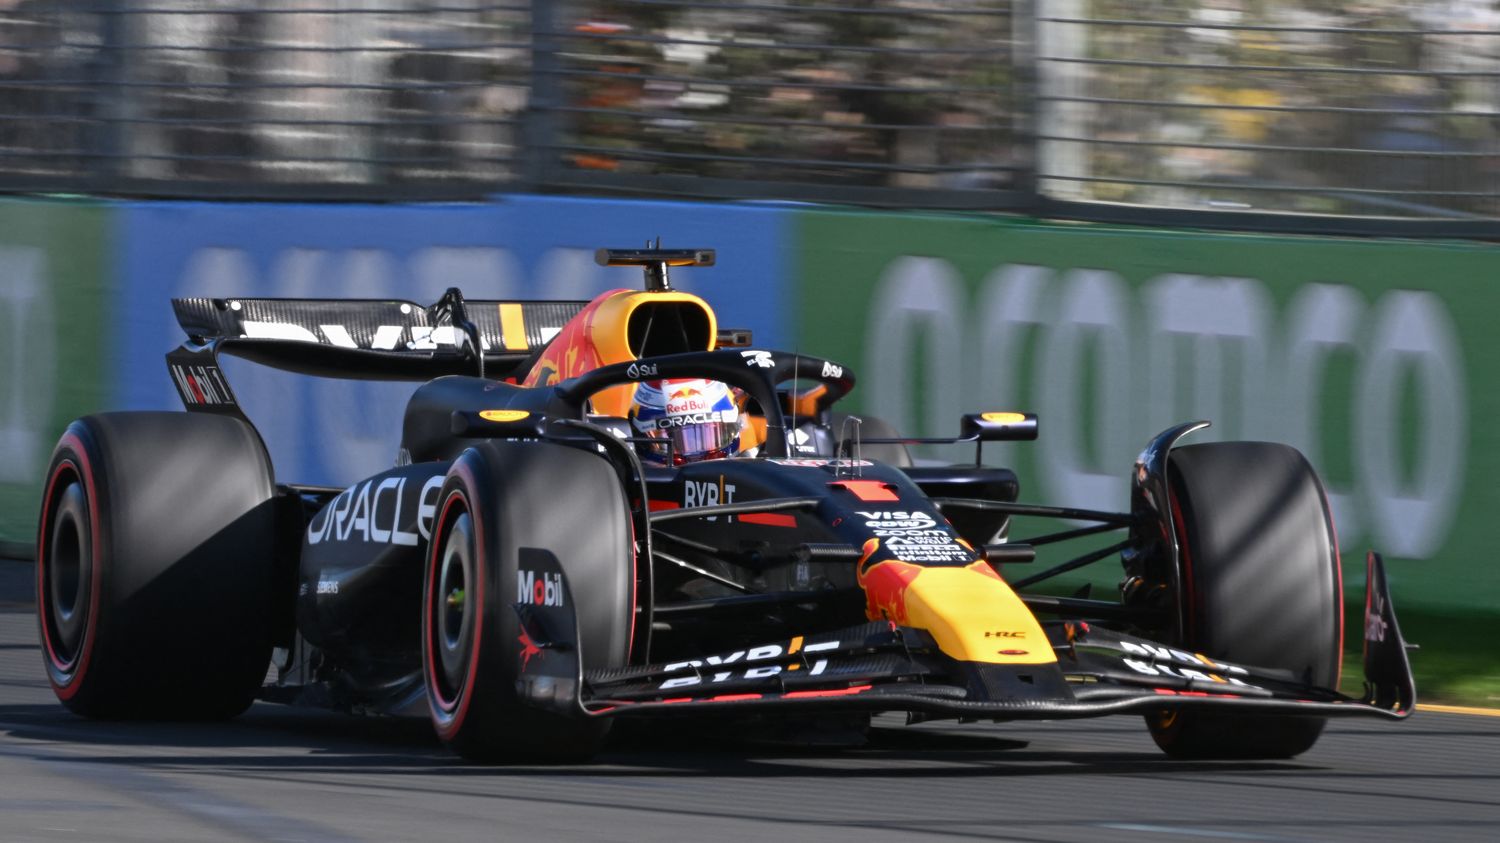 F1: struggling in Melbourne, Max Verstappen still takes pole position for Australian GP